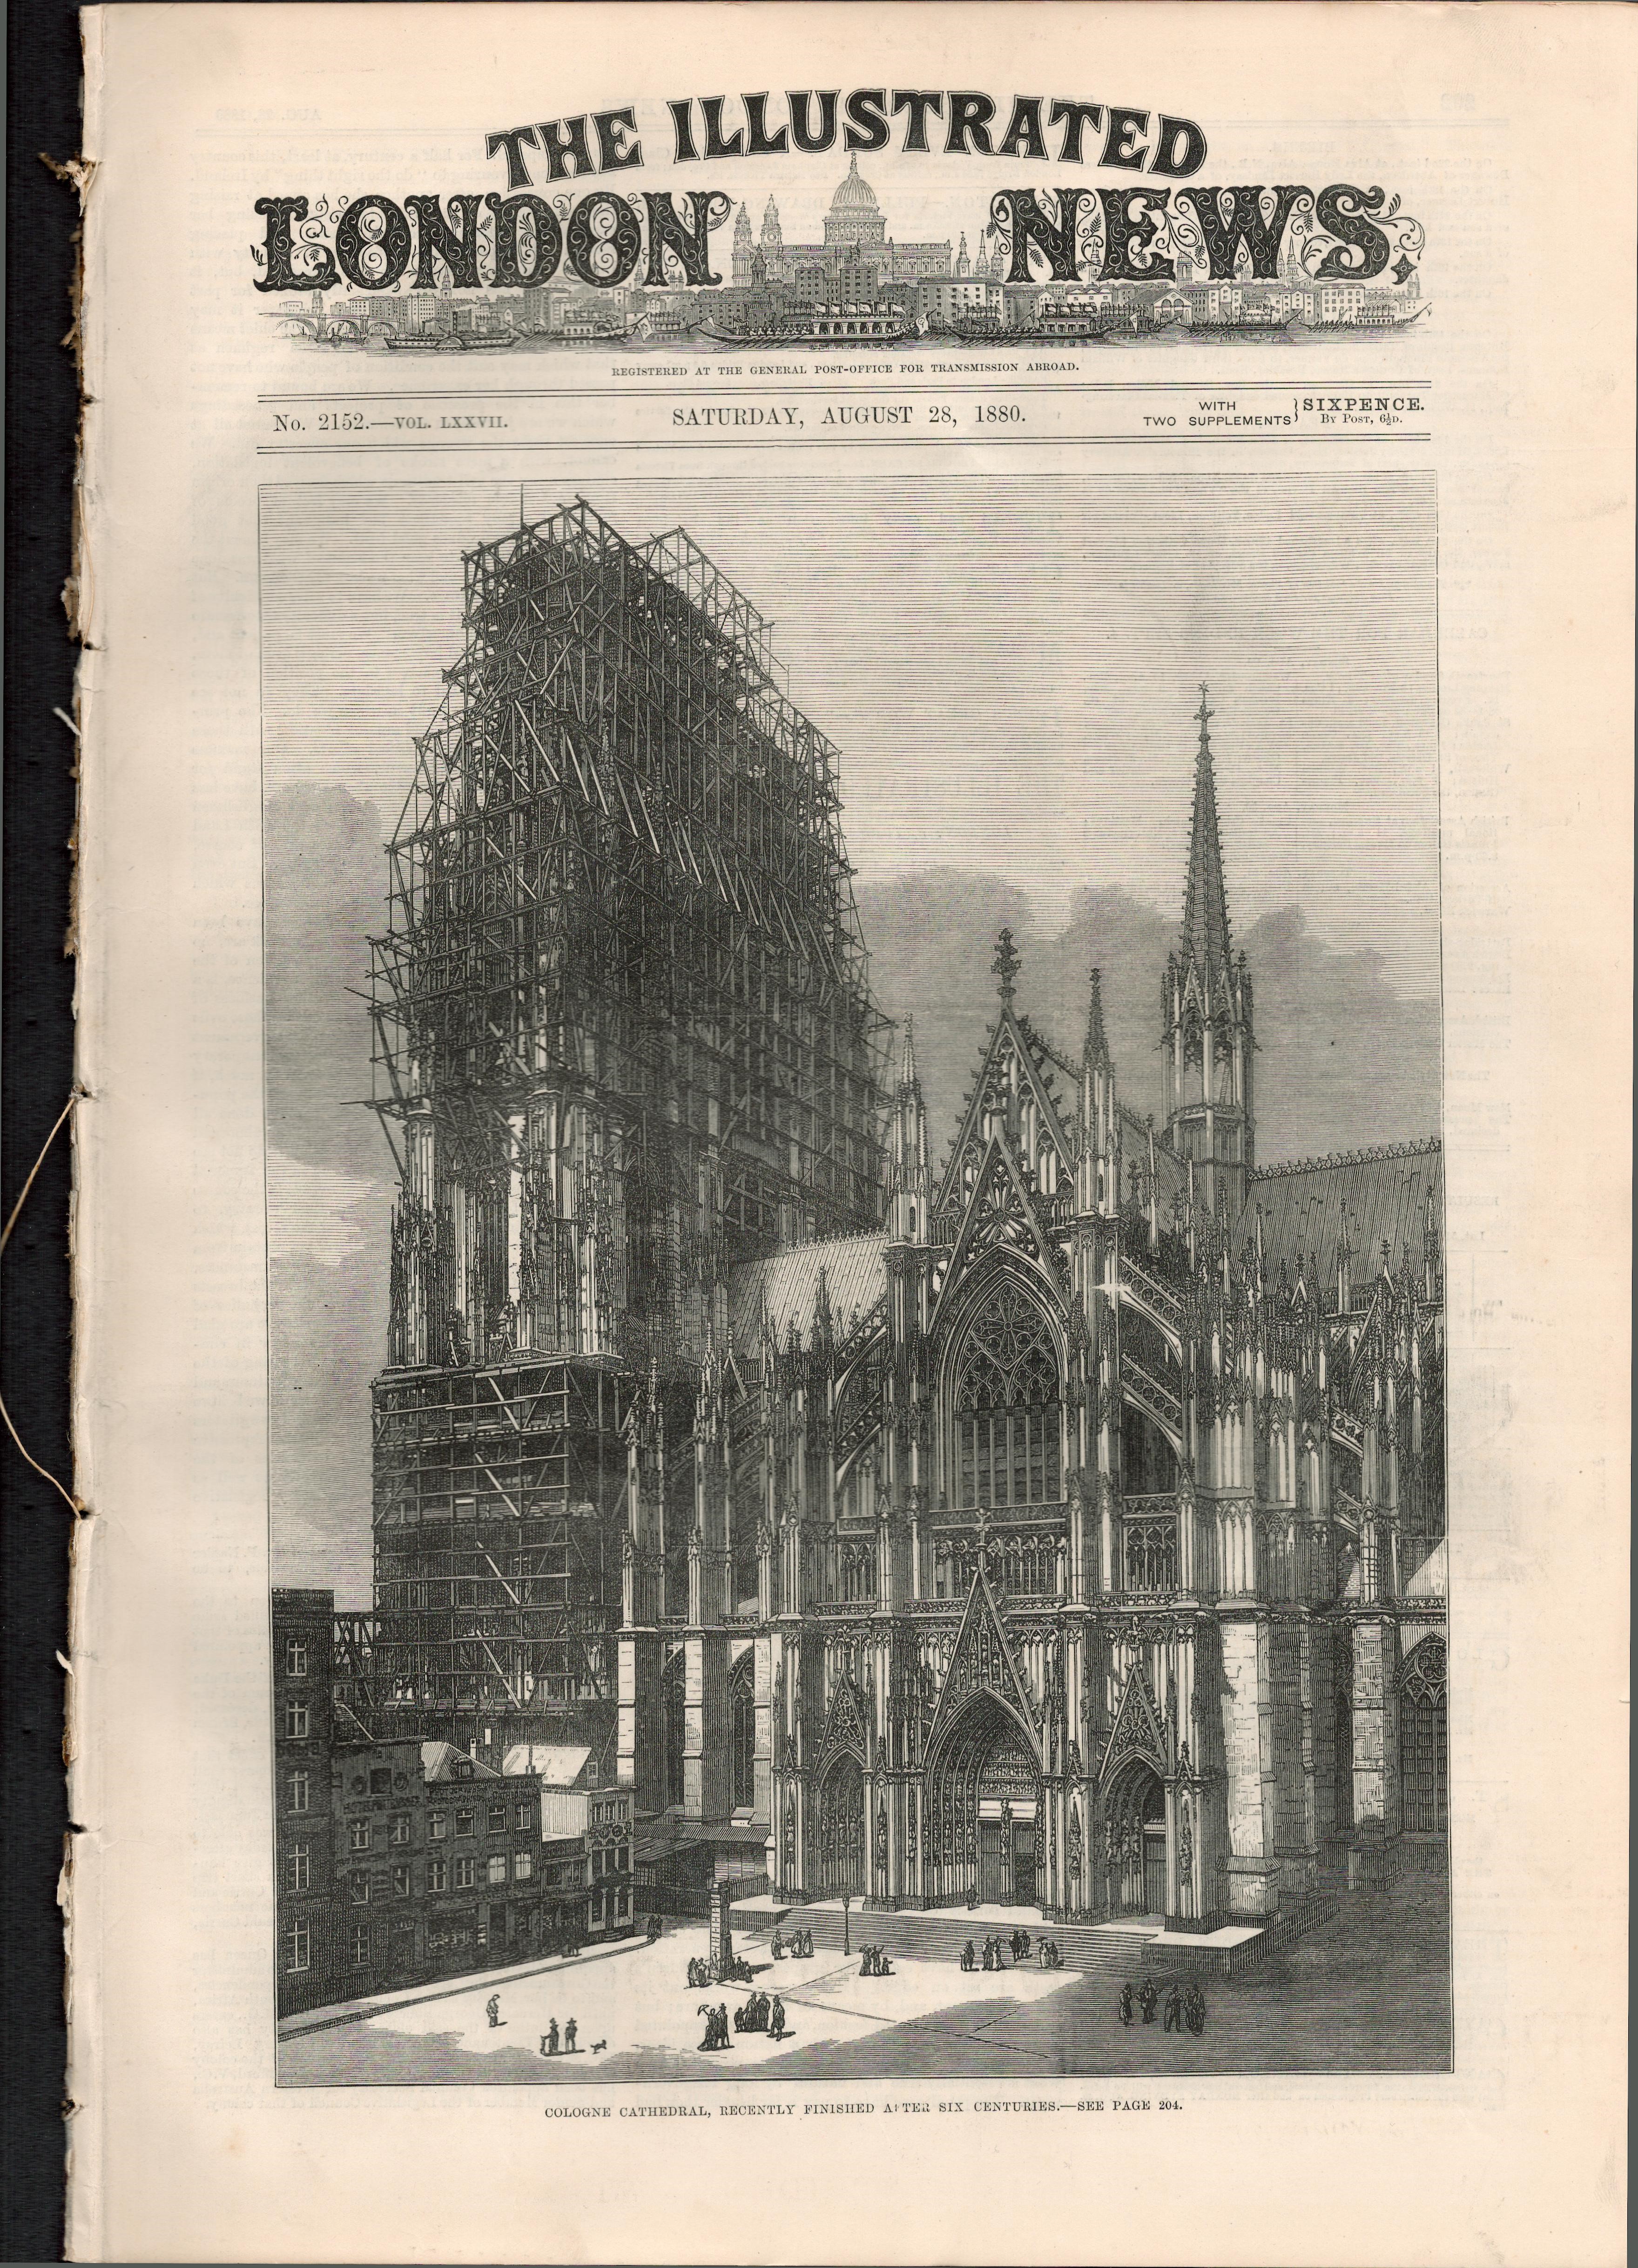 Irish Home Rule Glasgow City Centre Riots Antique 1880 Newspaper - Image 3 of 3